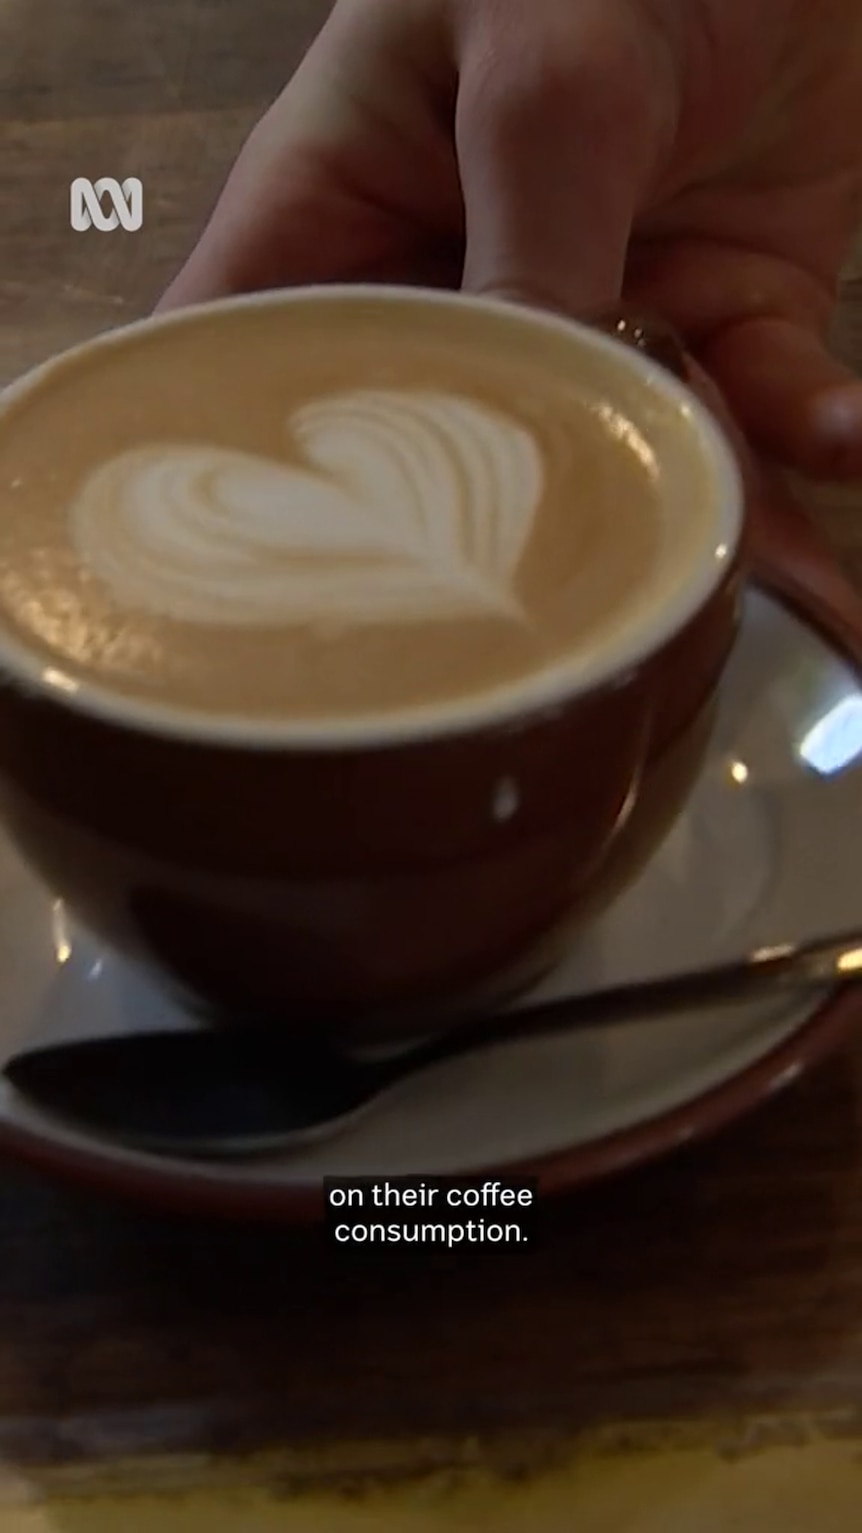 Latte art is displayed inside a dark coffee cup